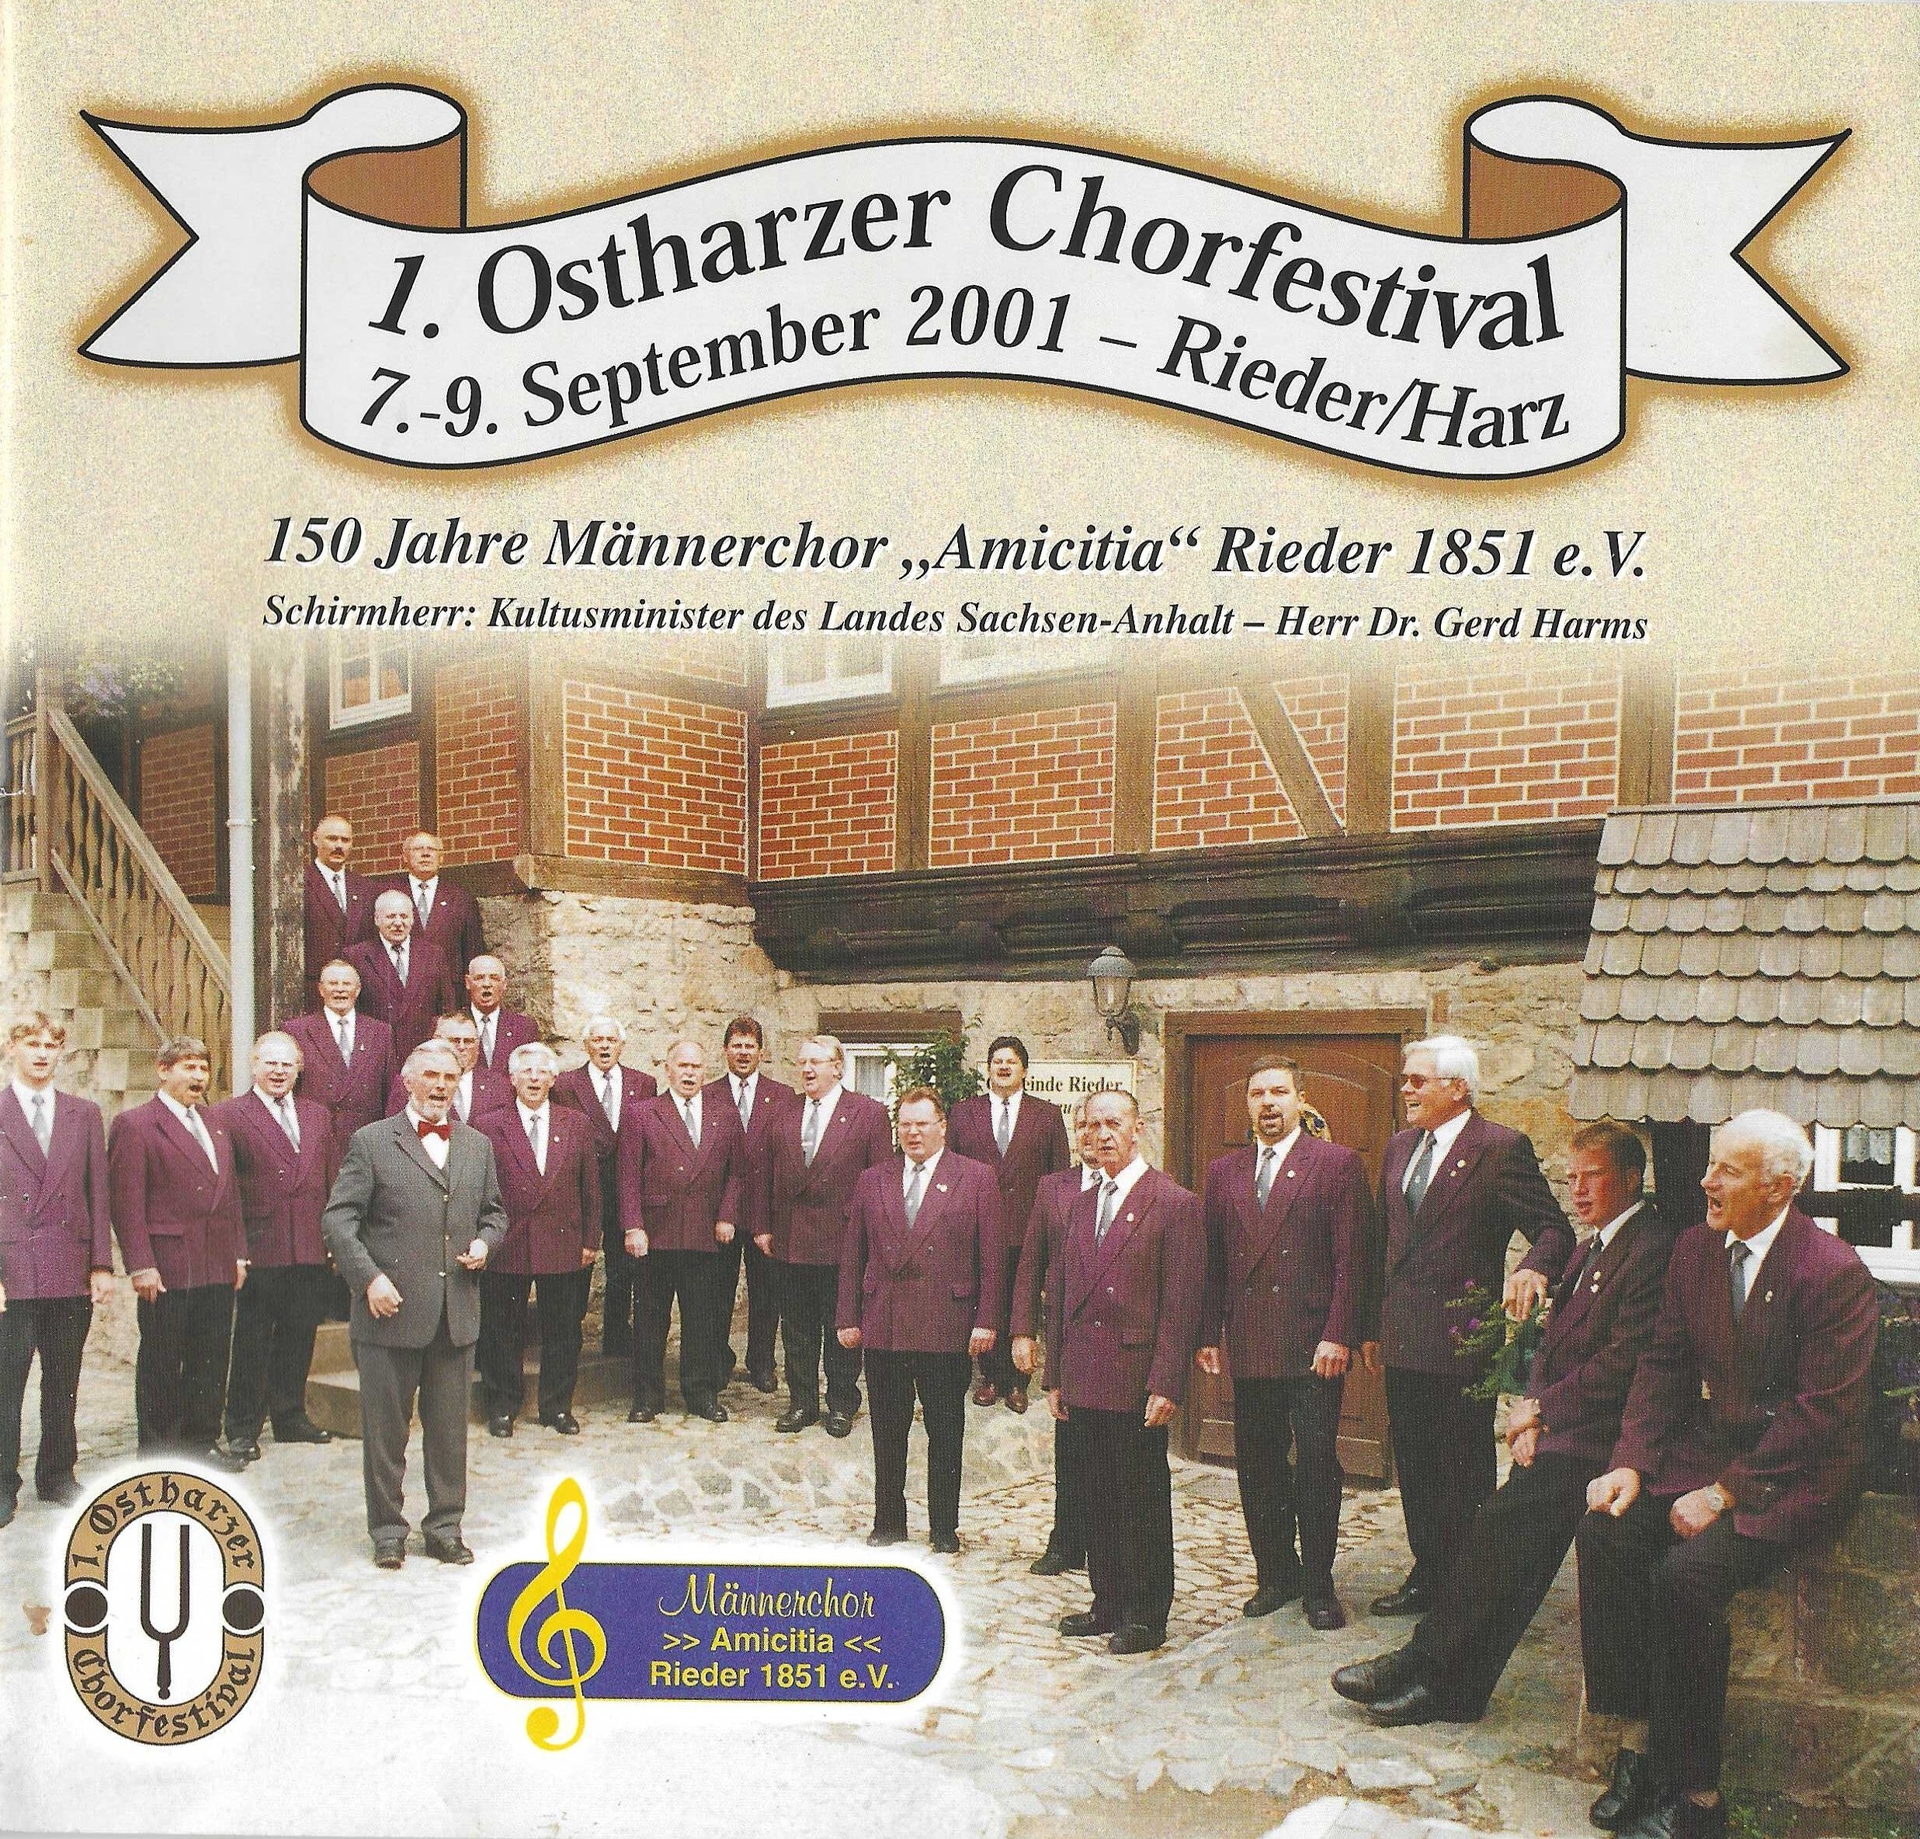 Bild: 1 Ostharzer Chorfestival 2001 (1)